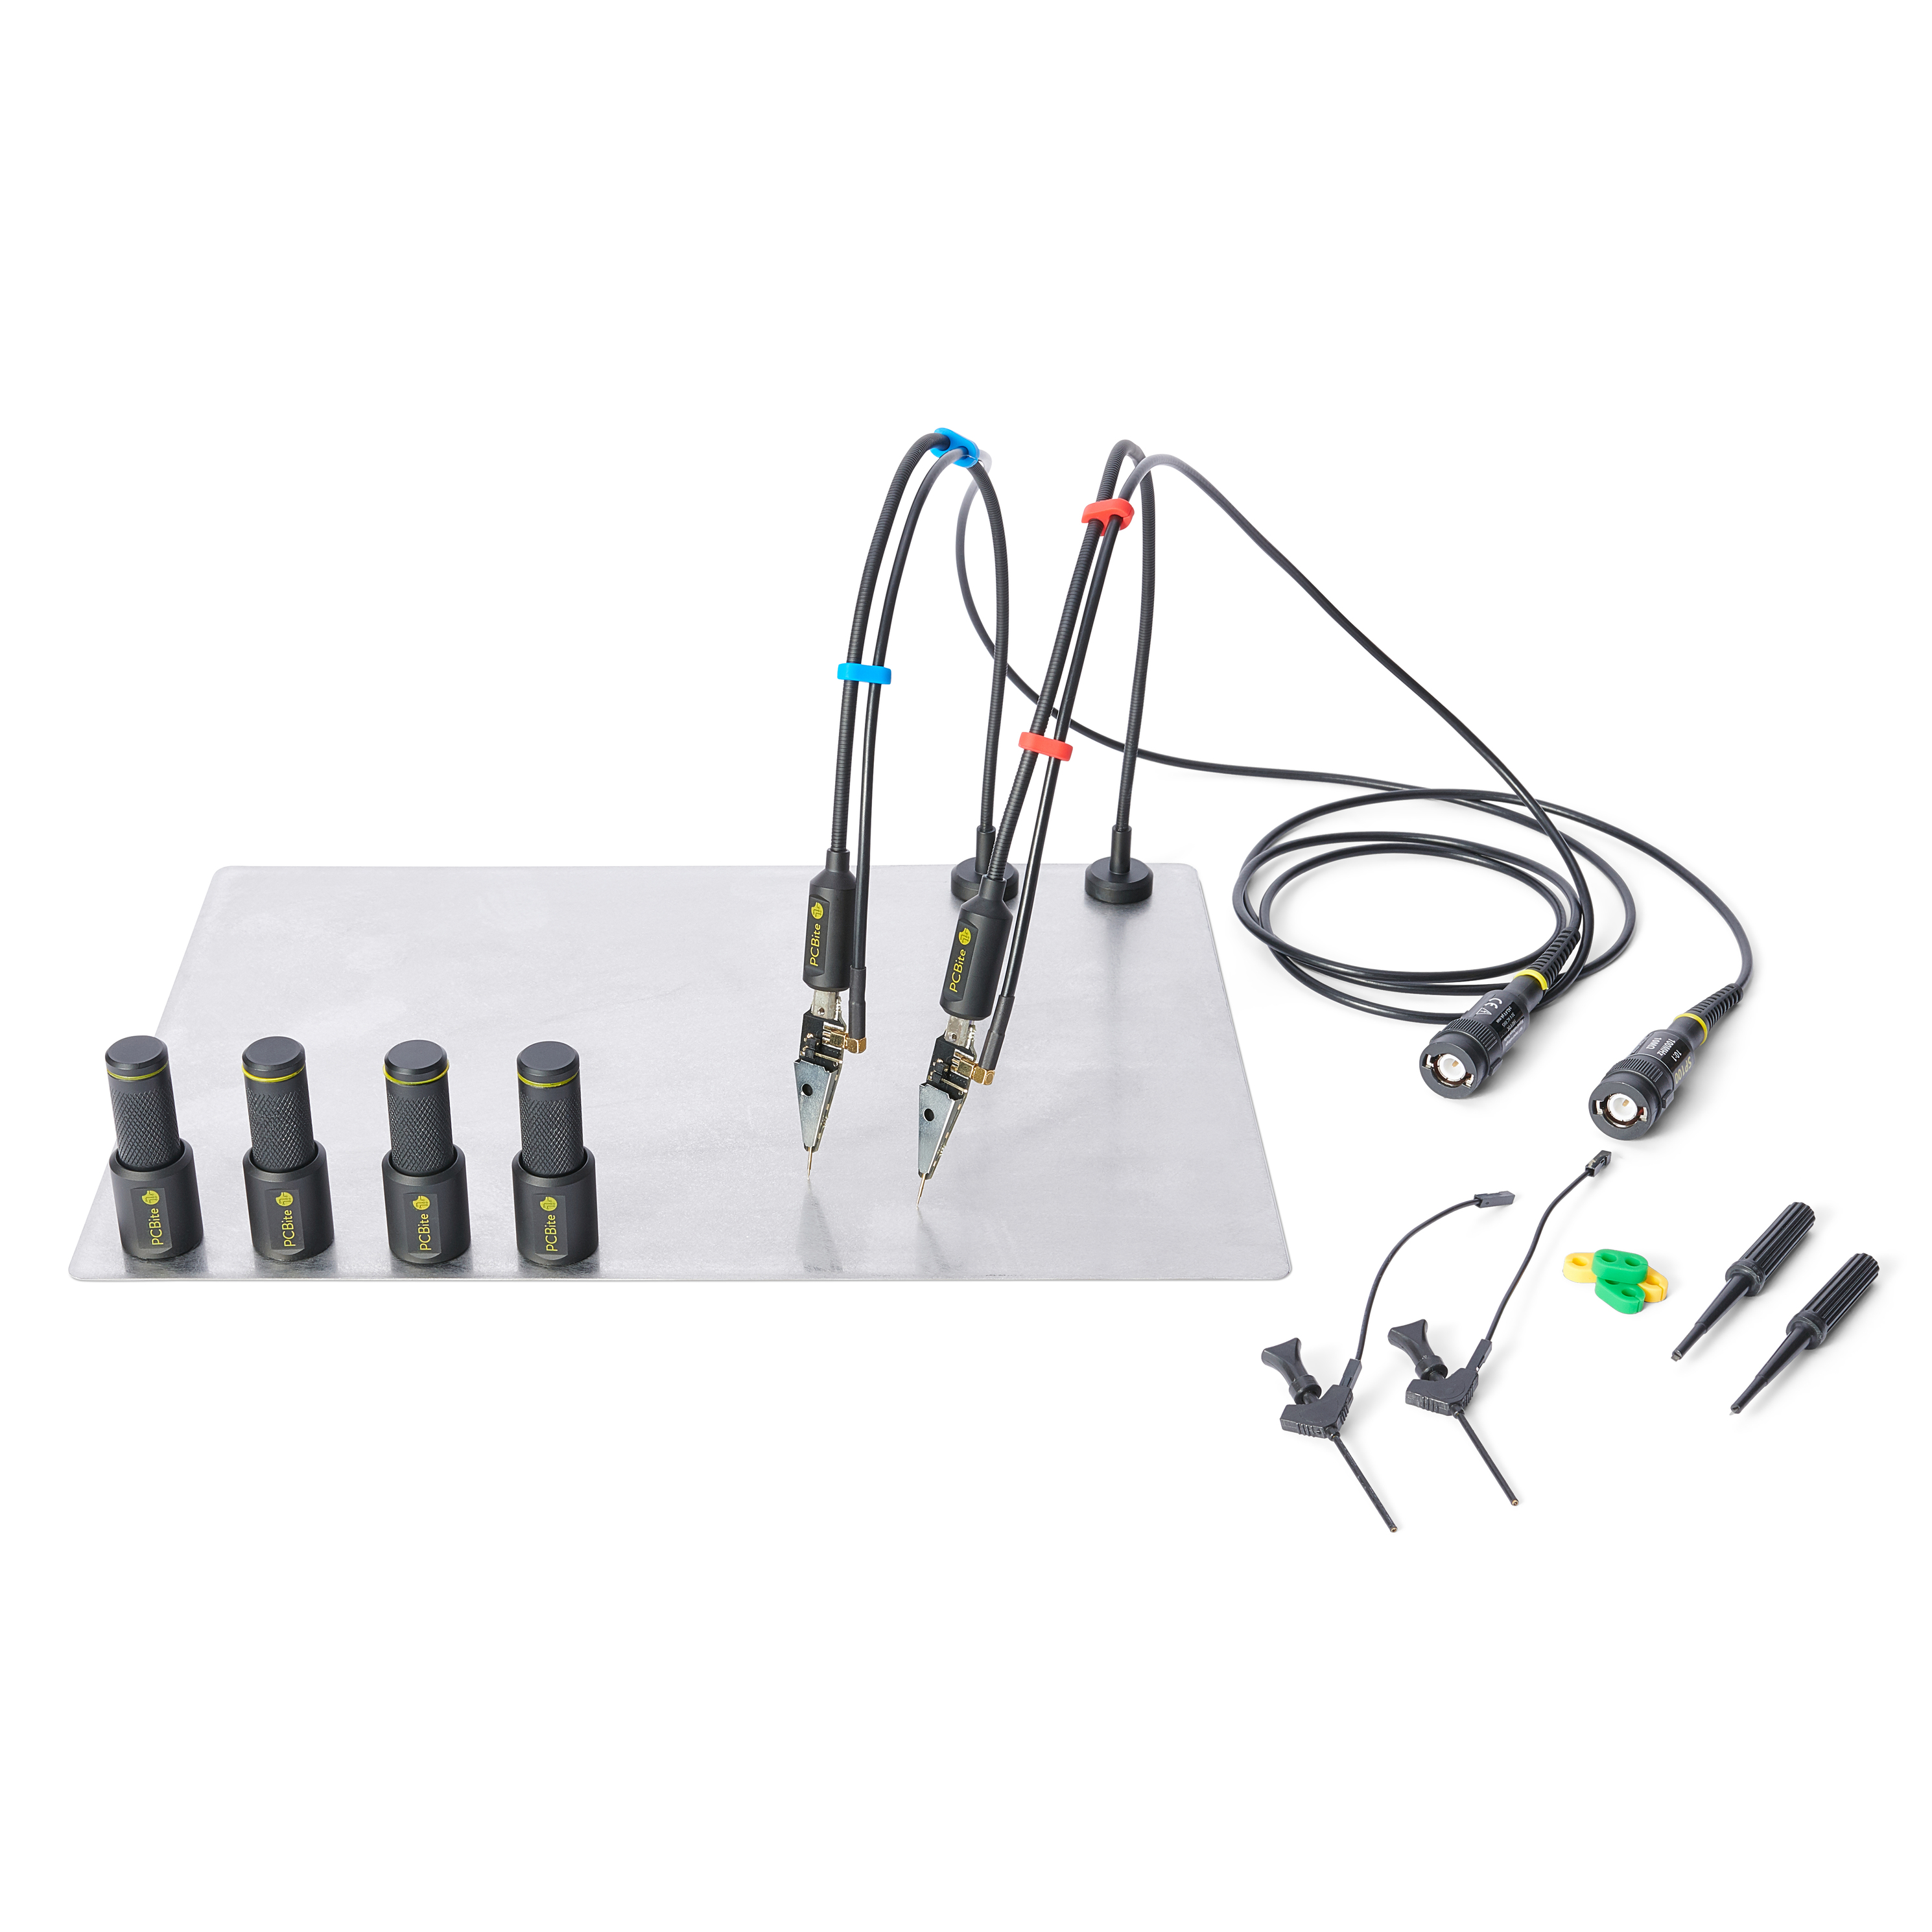 PCBite kit with 2x SP100 100 MHz probes @ electrokit